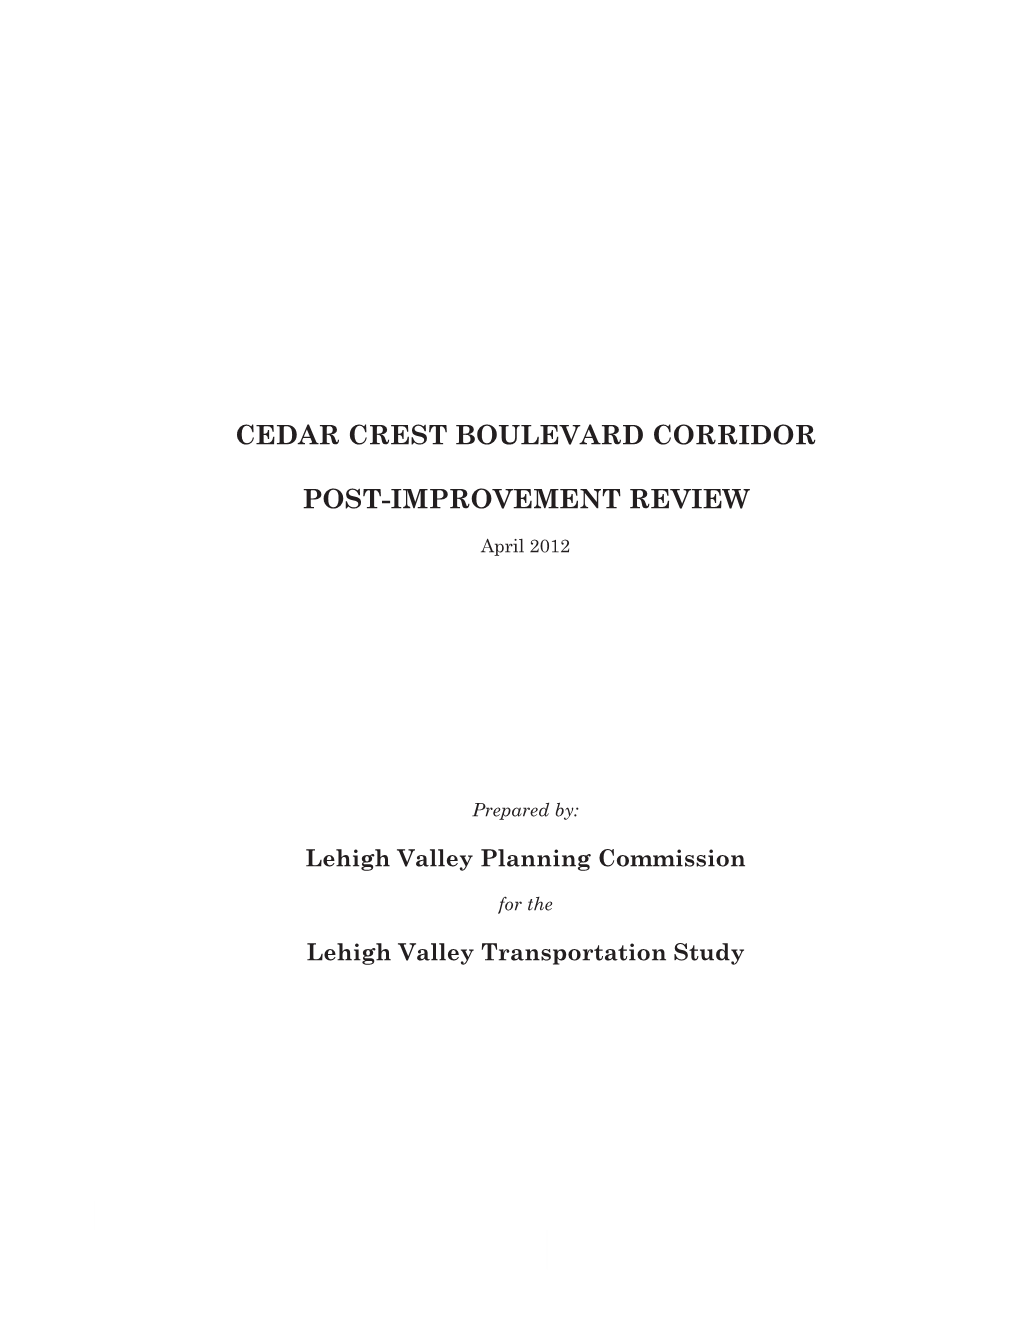 Cedar Crest Boulevard Corridor Post-Improvement Review